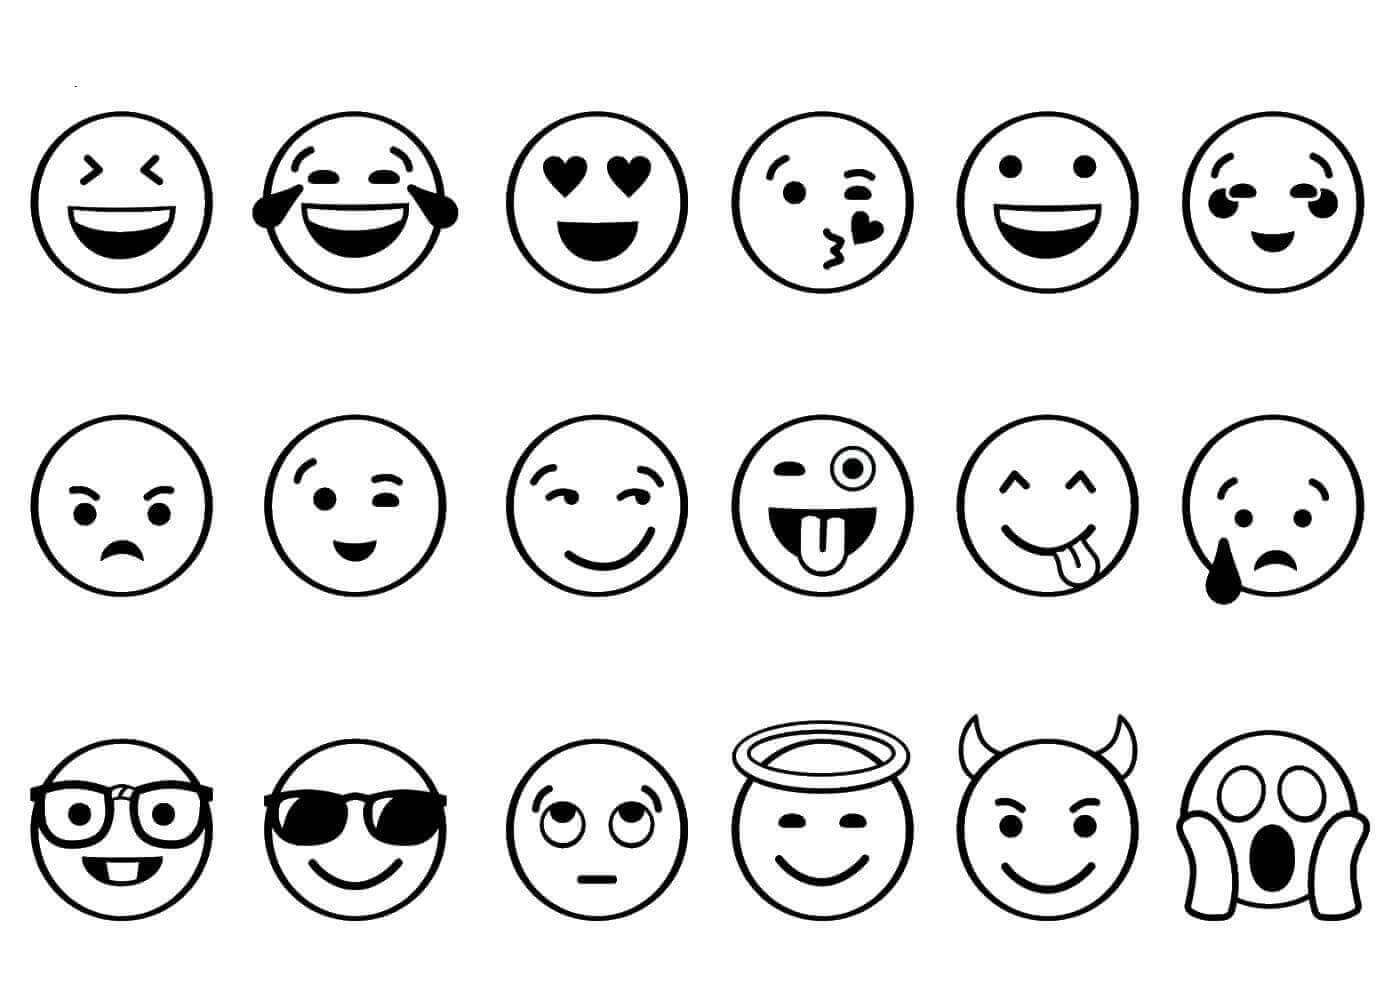 Printable Emojis Coloring Pages